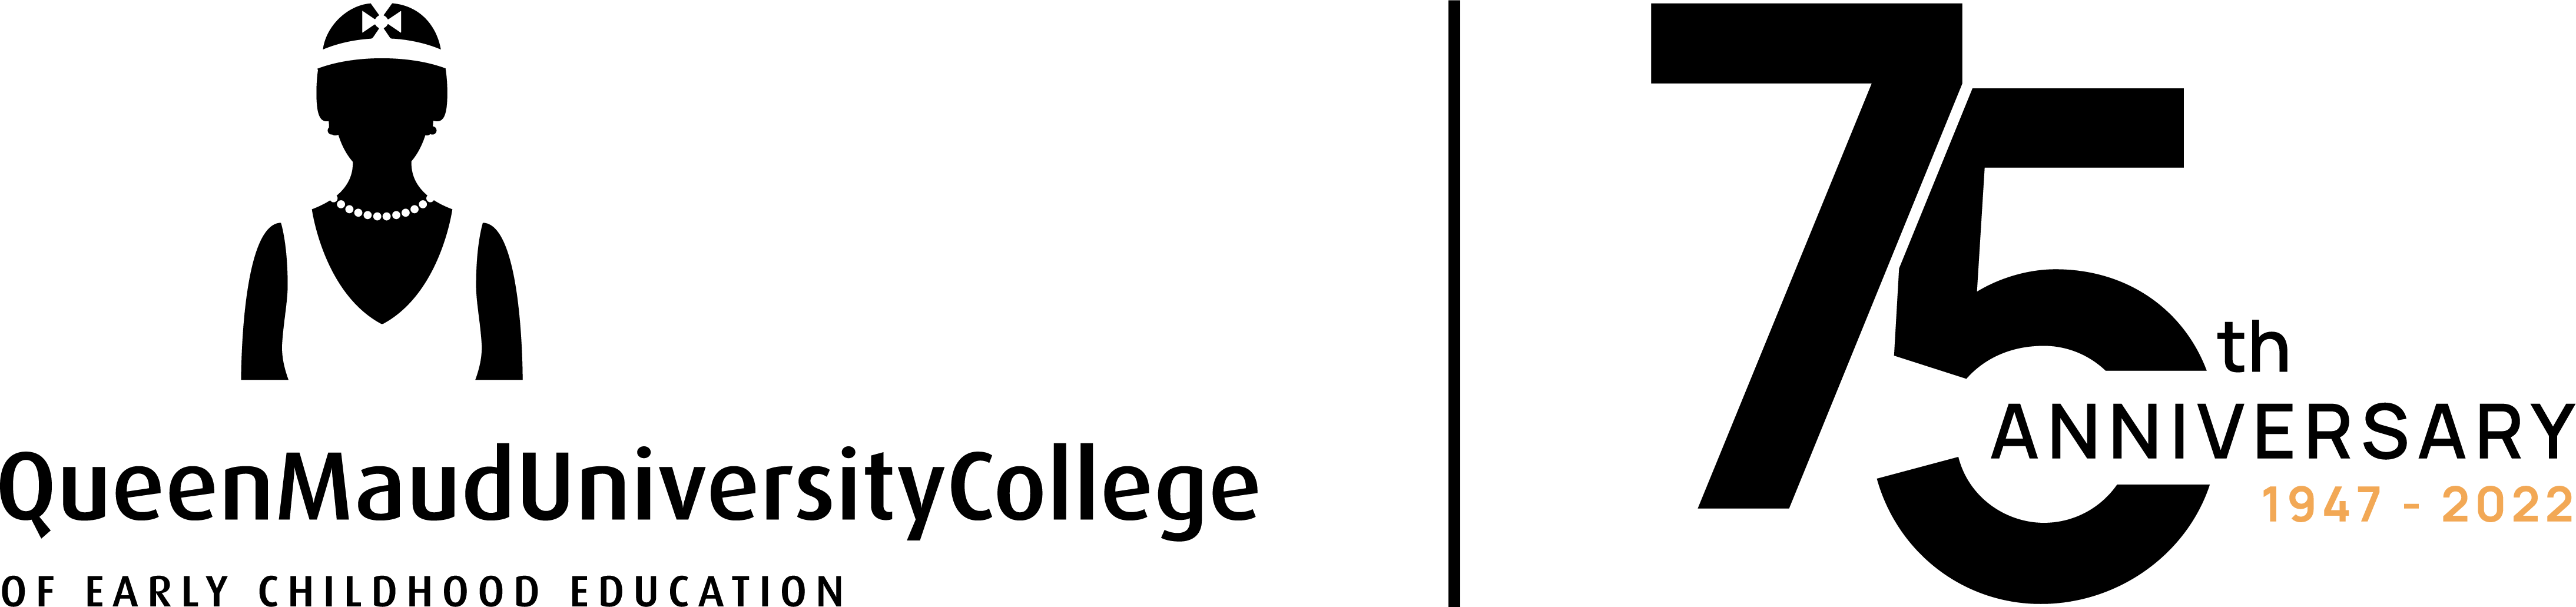 DMMH-logo